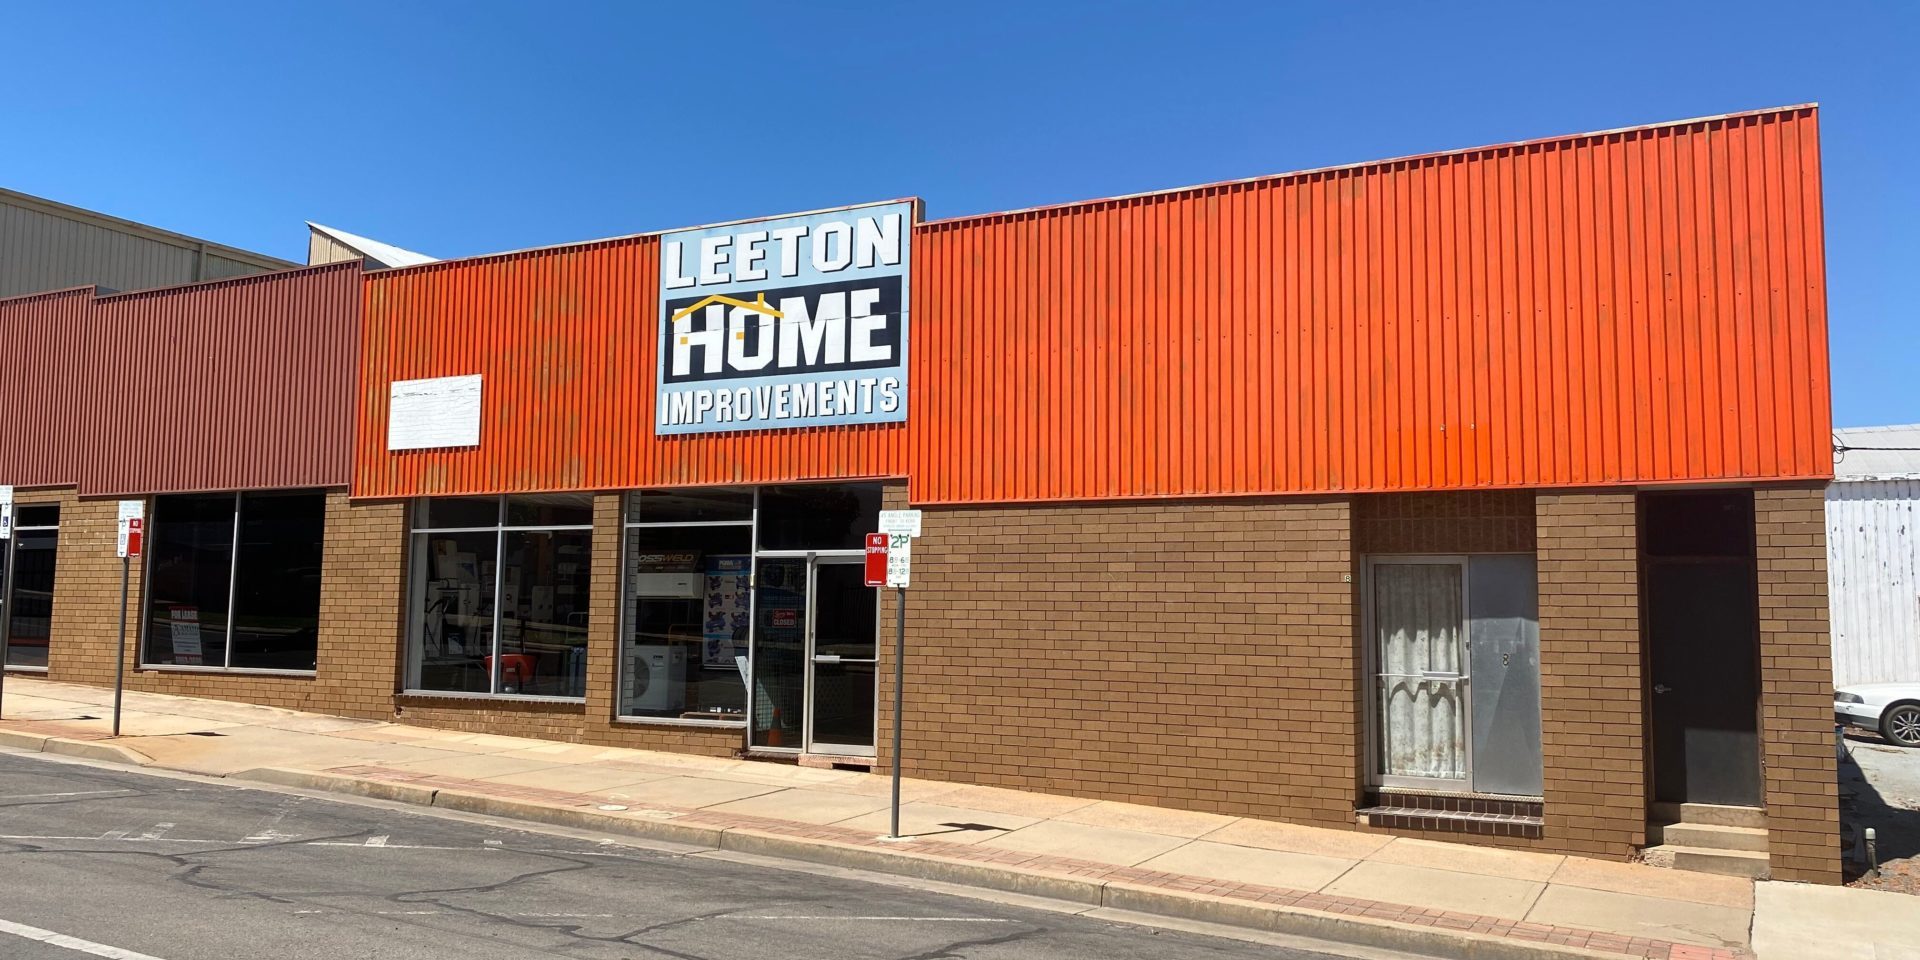 Leeton Home Improvements